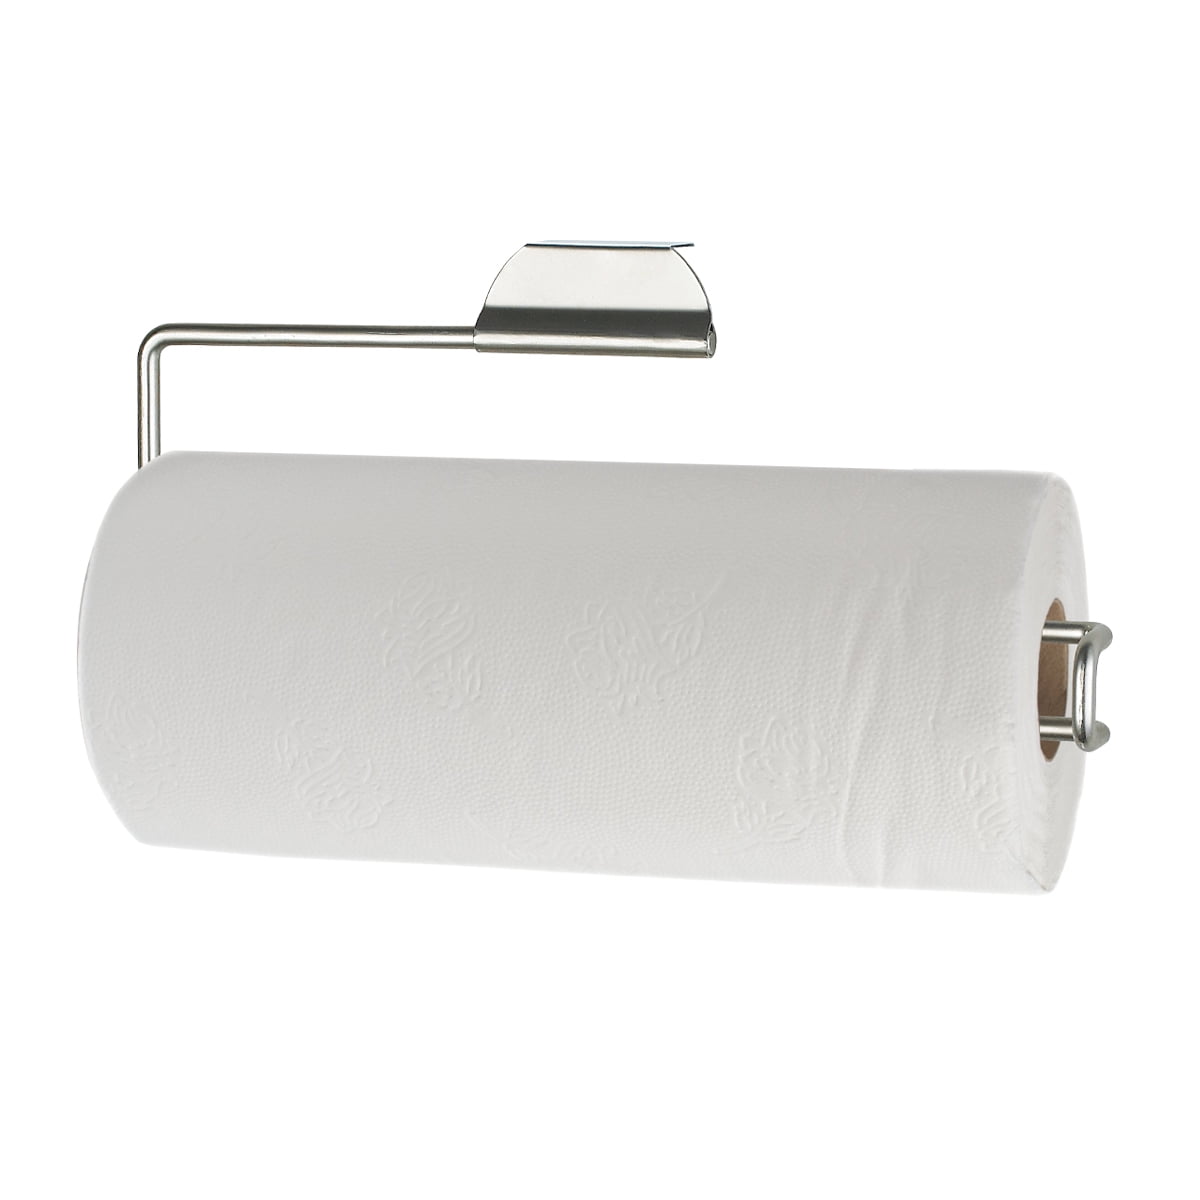 Zojila Isis Paper Towel Roll Holder, Brushed Nickel